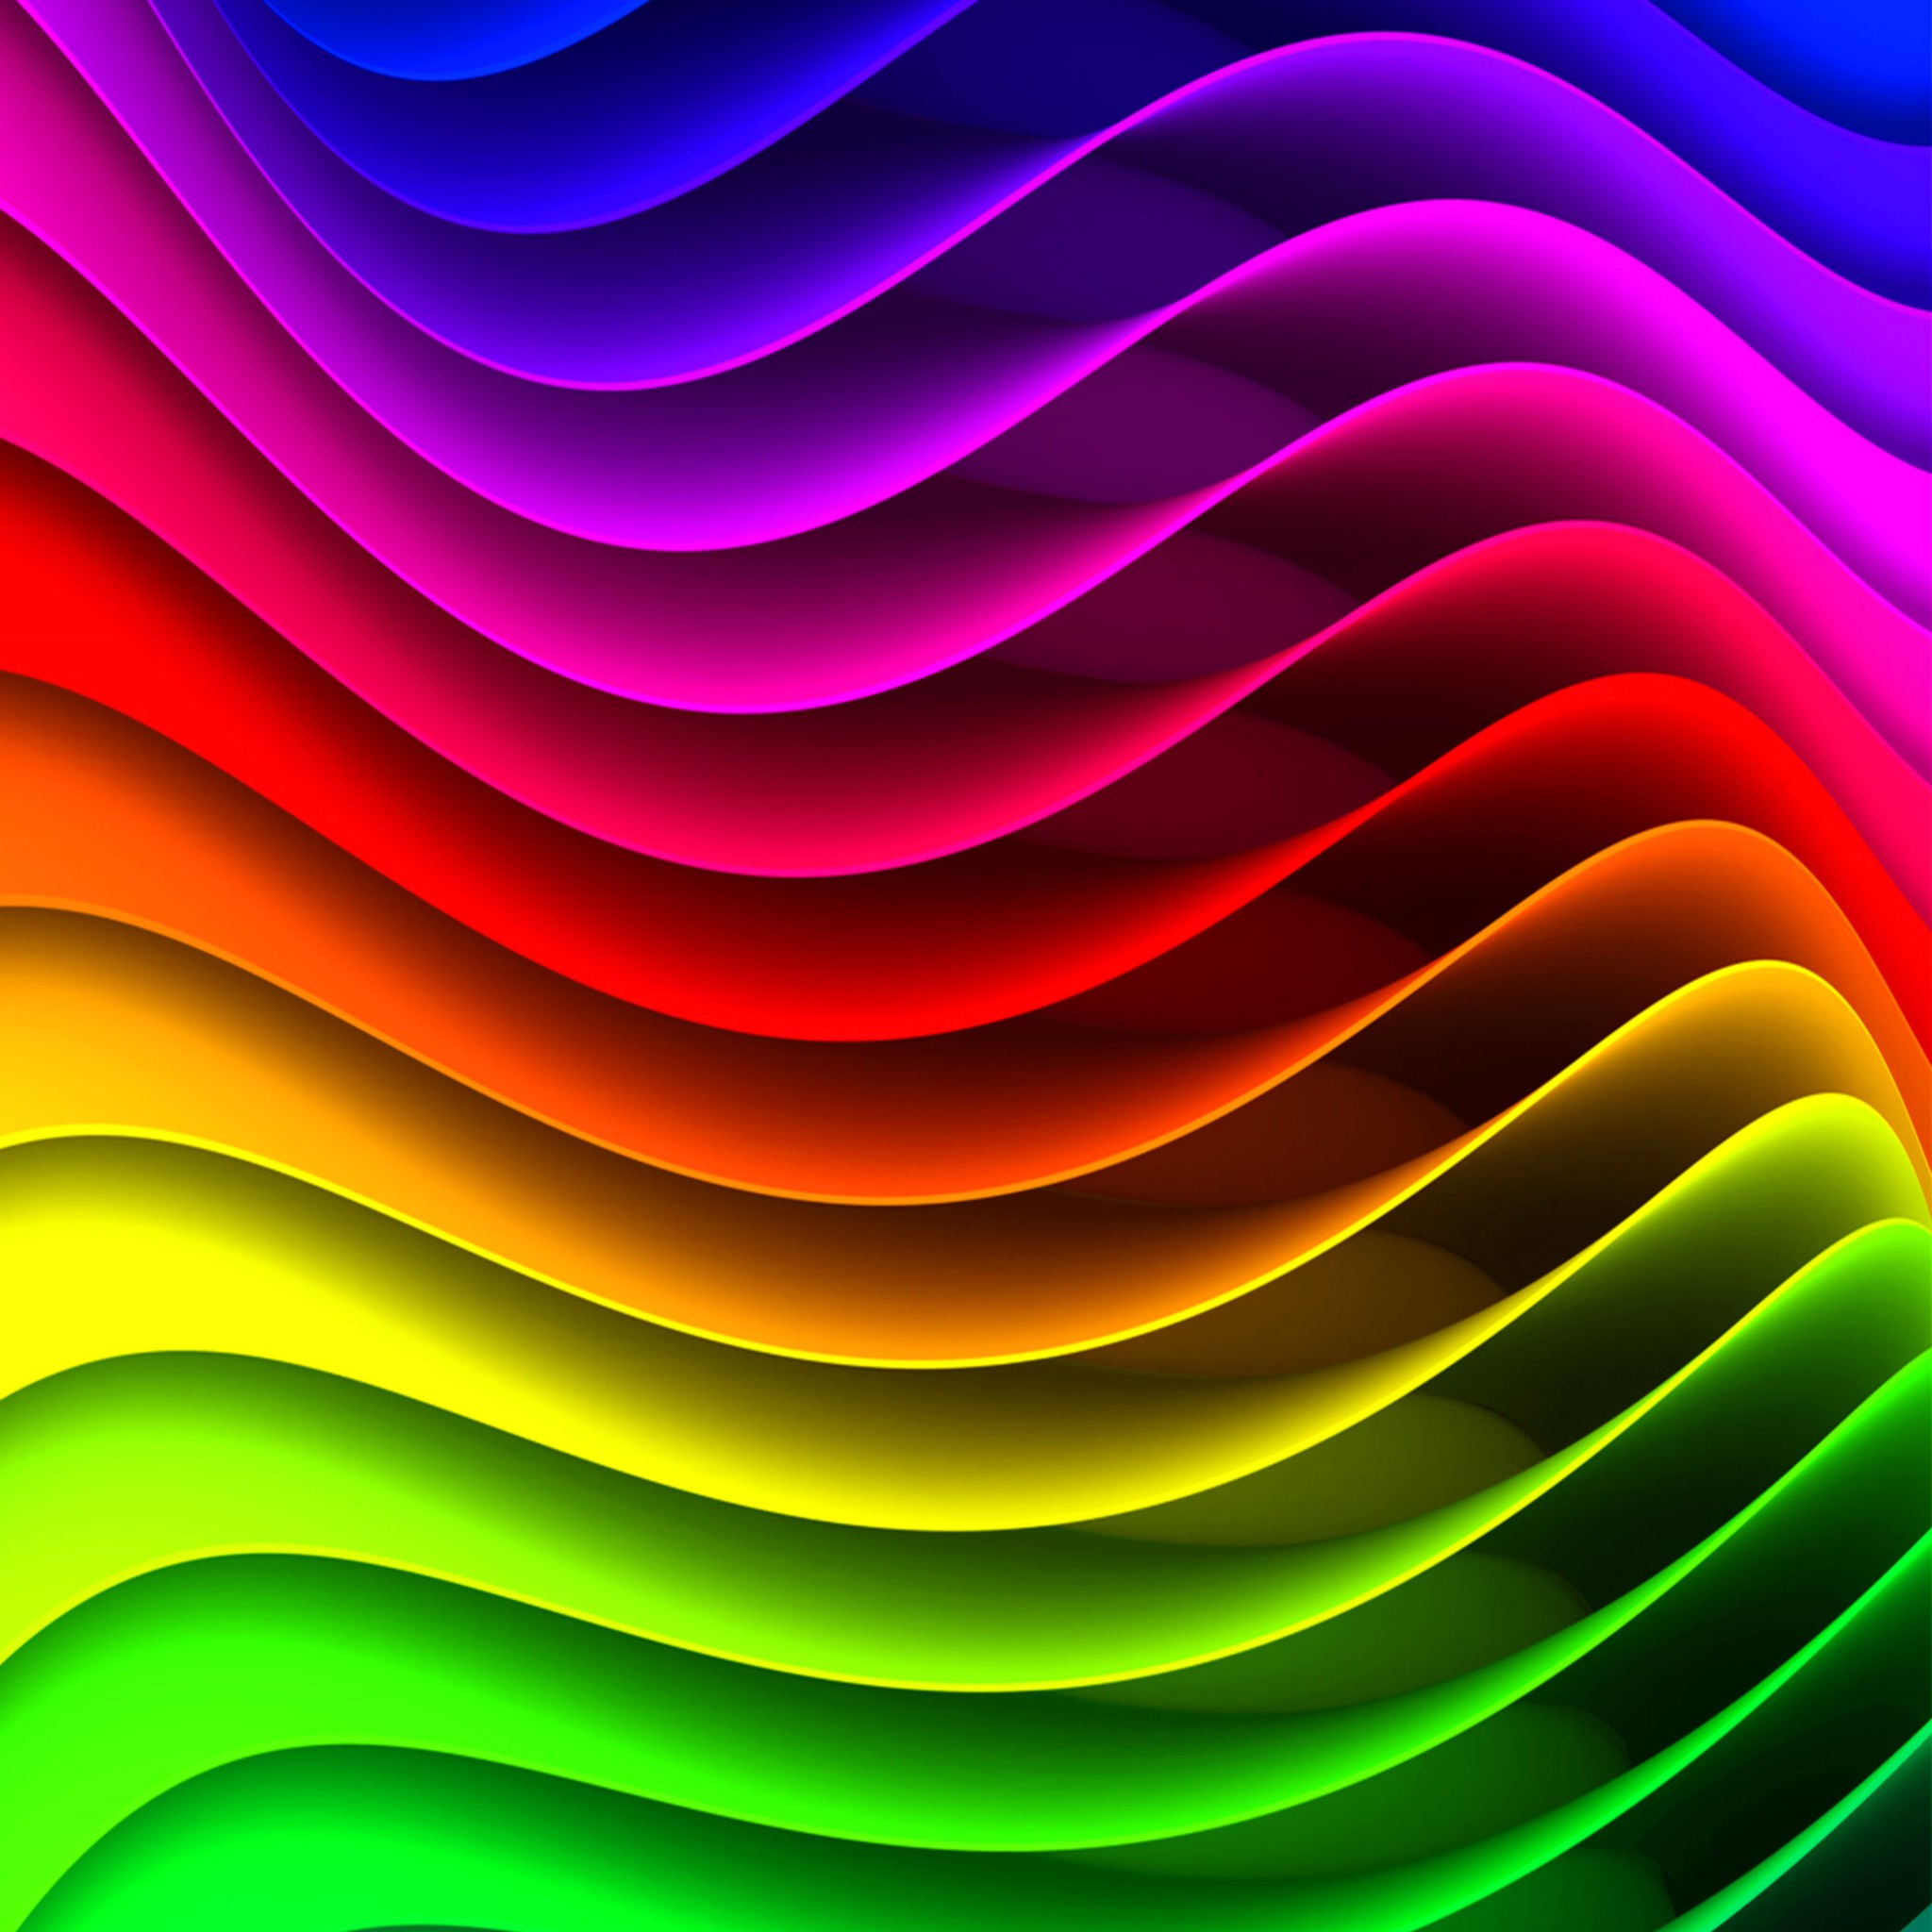 Colorful Ipad Air Wallpapers Hd 93 Ipad Air Retina Wallpapers And Backgrounds Ipad タブレット壁紙ギャラリー